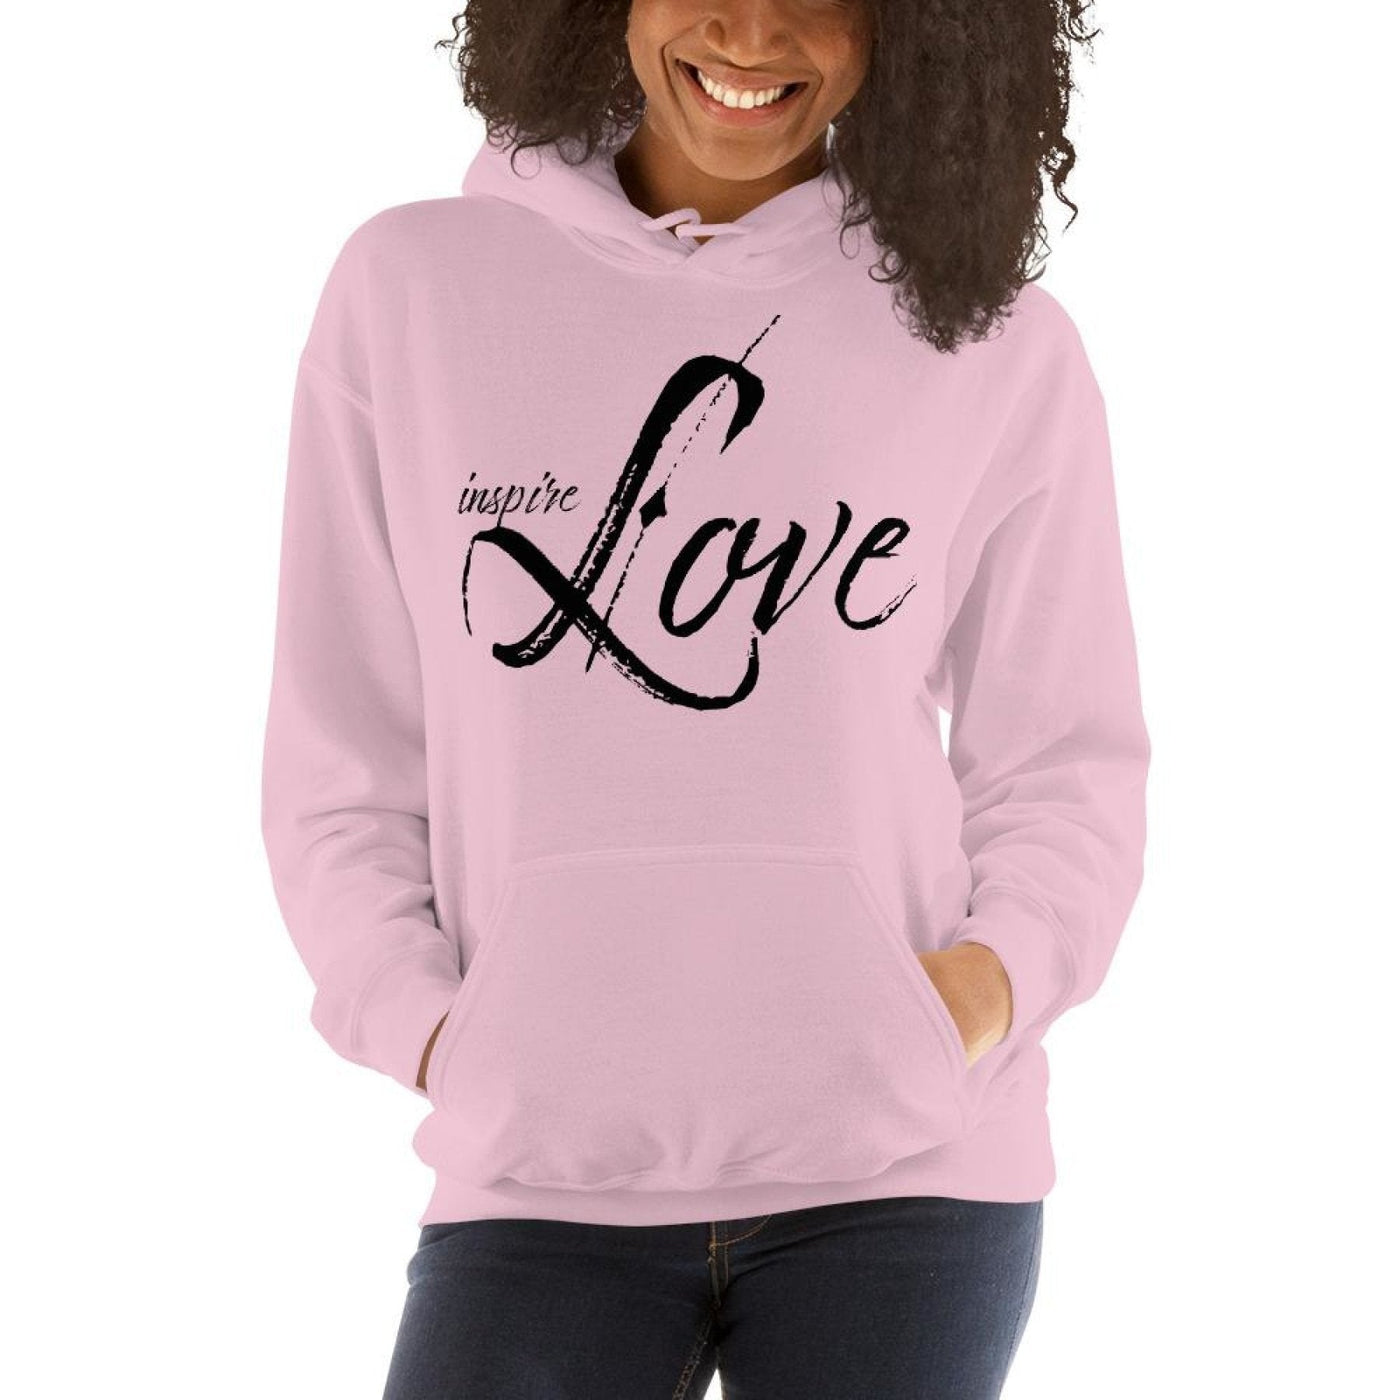 Womens Hoodie - Pullover Sweatshirt - Black Graphic/inspire Love - Womens |